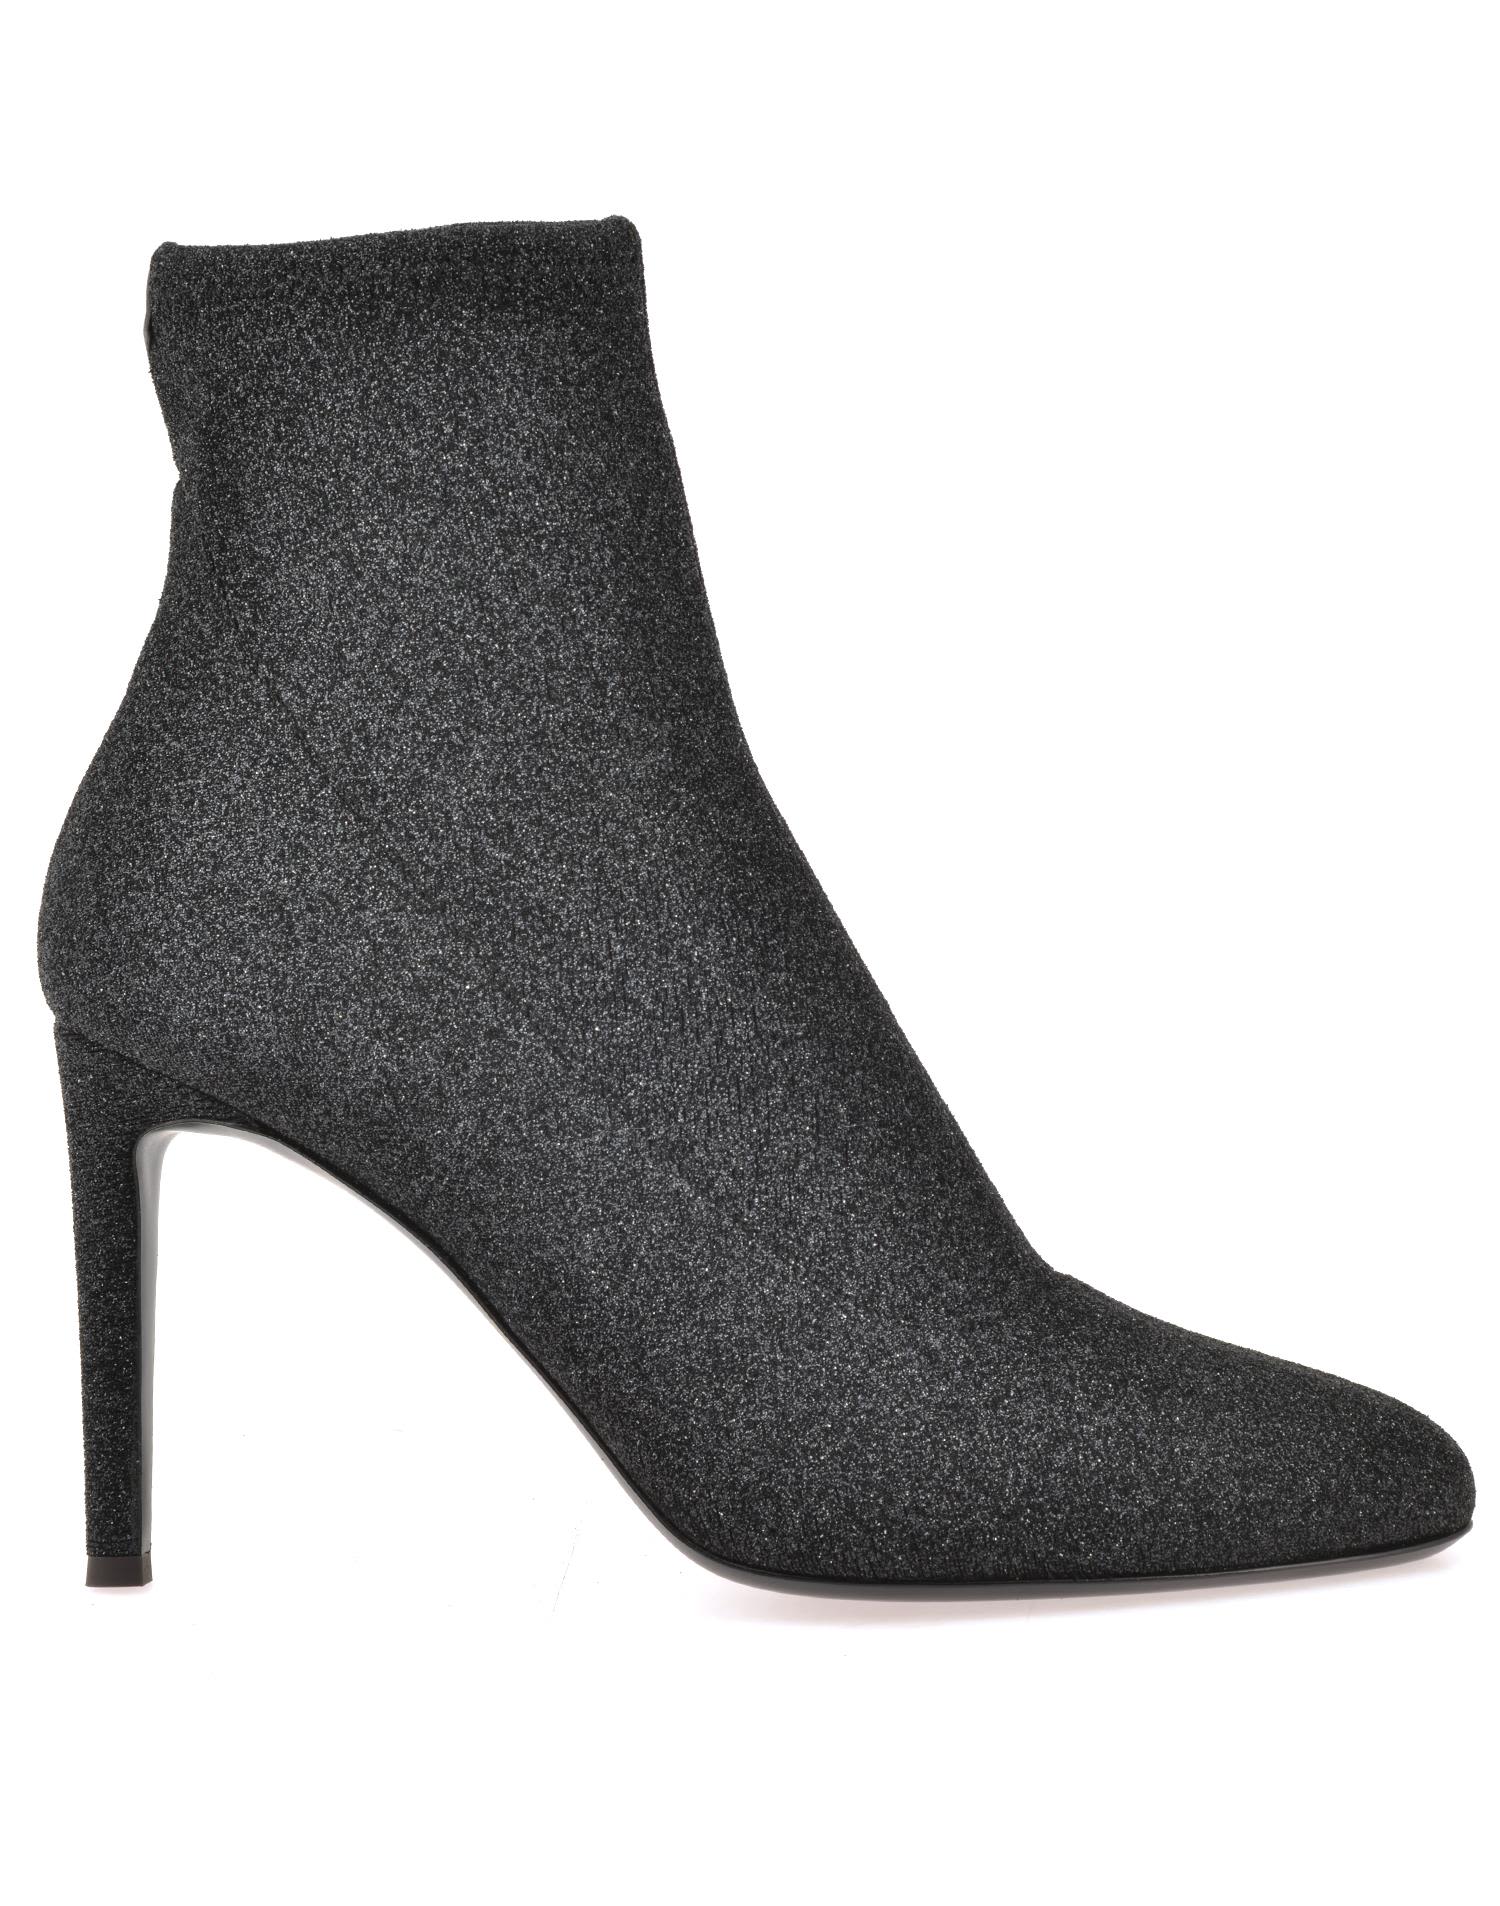 GIUSEPPE ZANOTTI Bimba Glitter High Heel Booties in Black | ModeSens